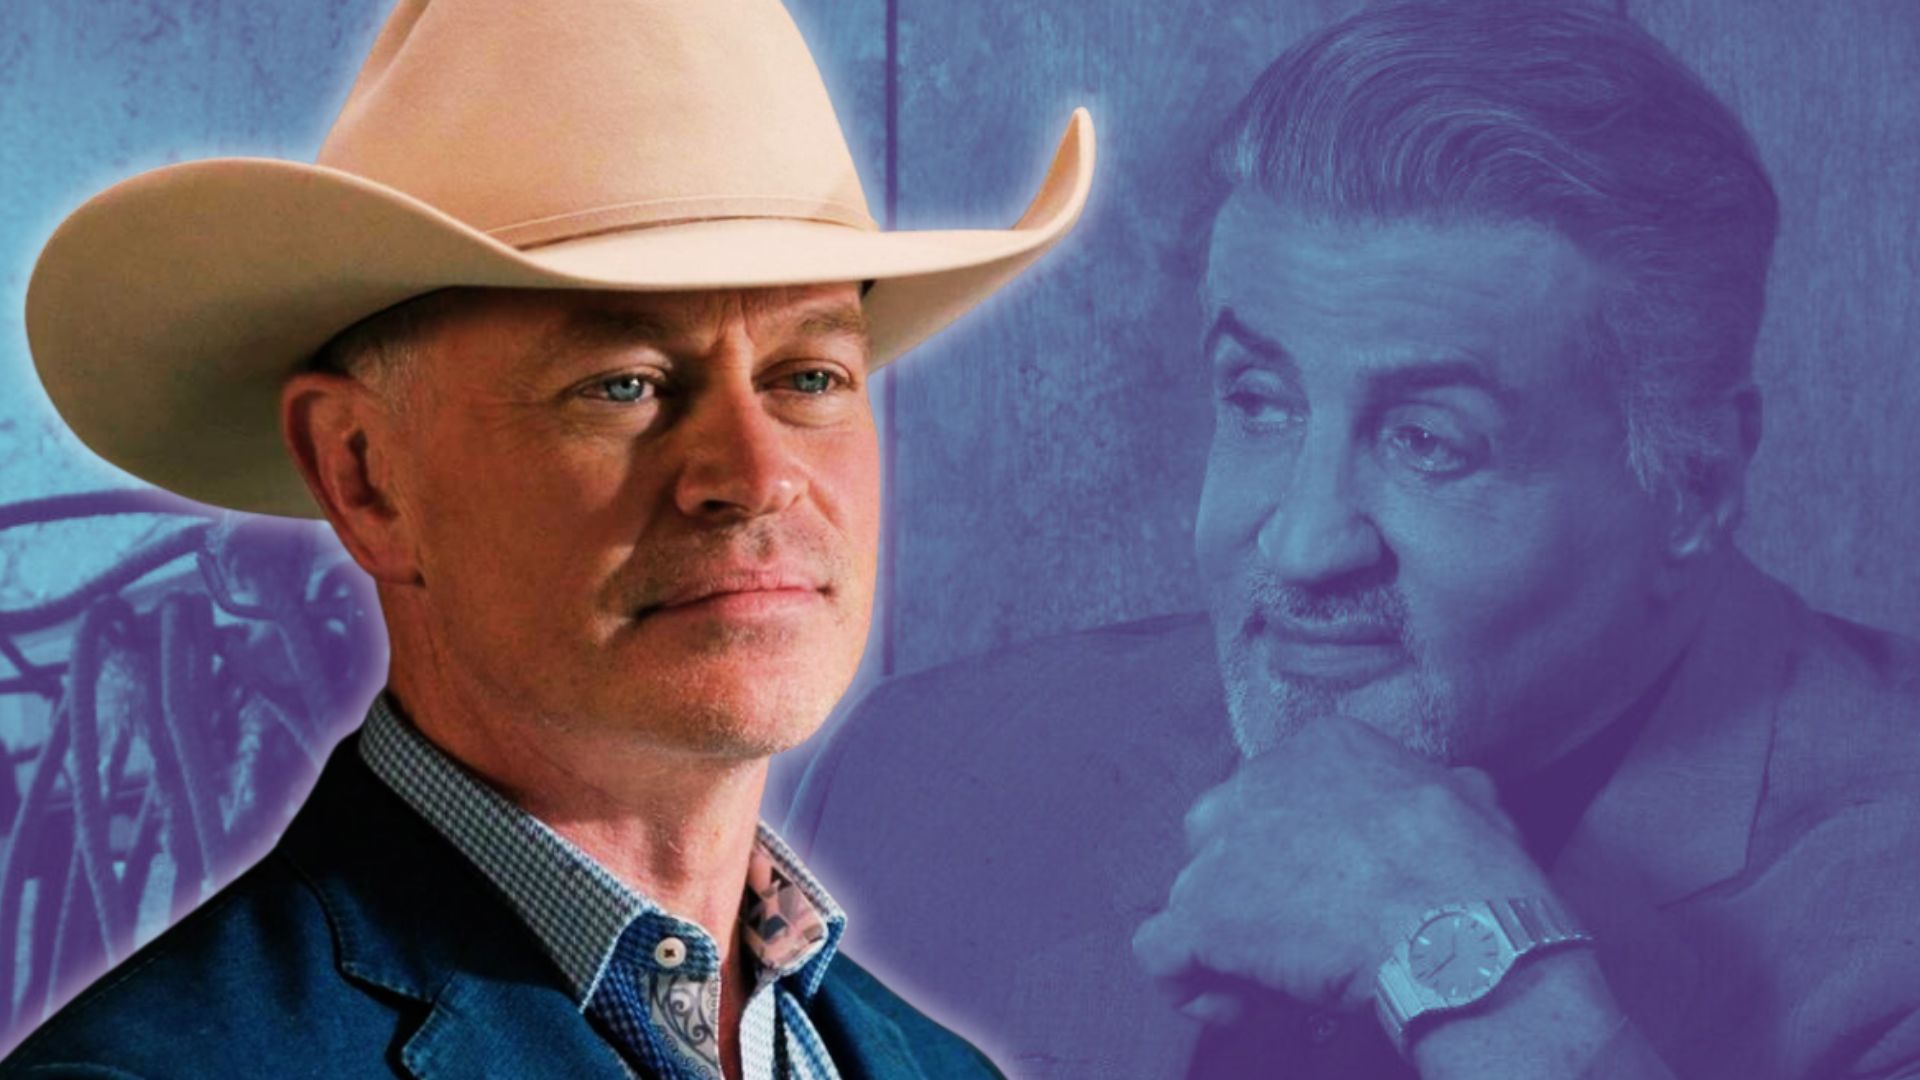 Tulsa King Season 2 Adds Yellowstone’s Neal McDonough as Sylvester Stallone’s Latest Enemy